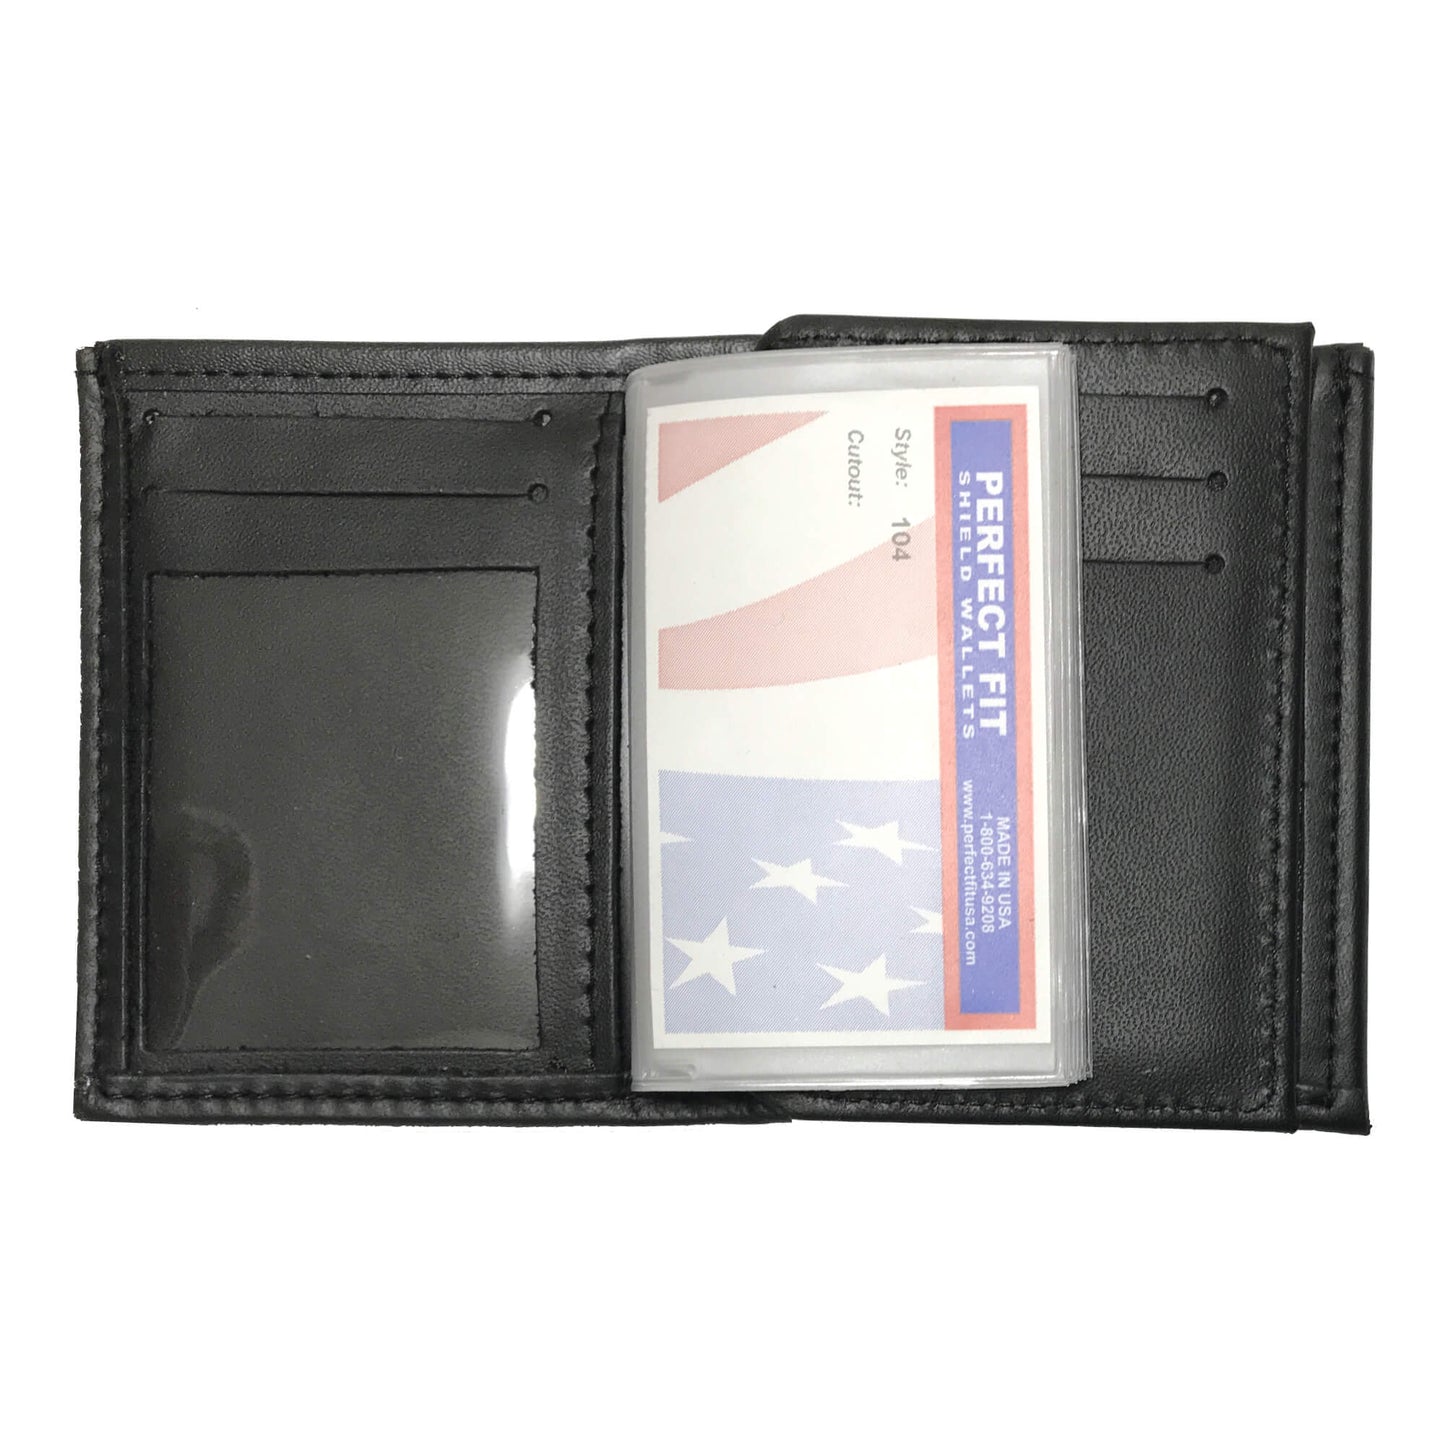 Phoenix Police Bifold Hidden LARGE Badge Wallet-Perfect Fit-911 Duty Gear USA